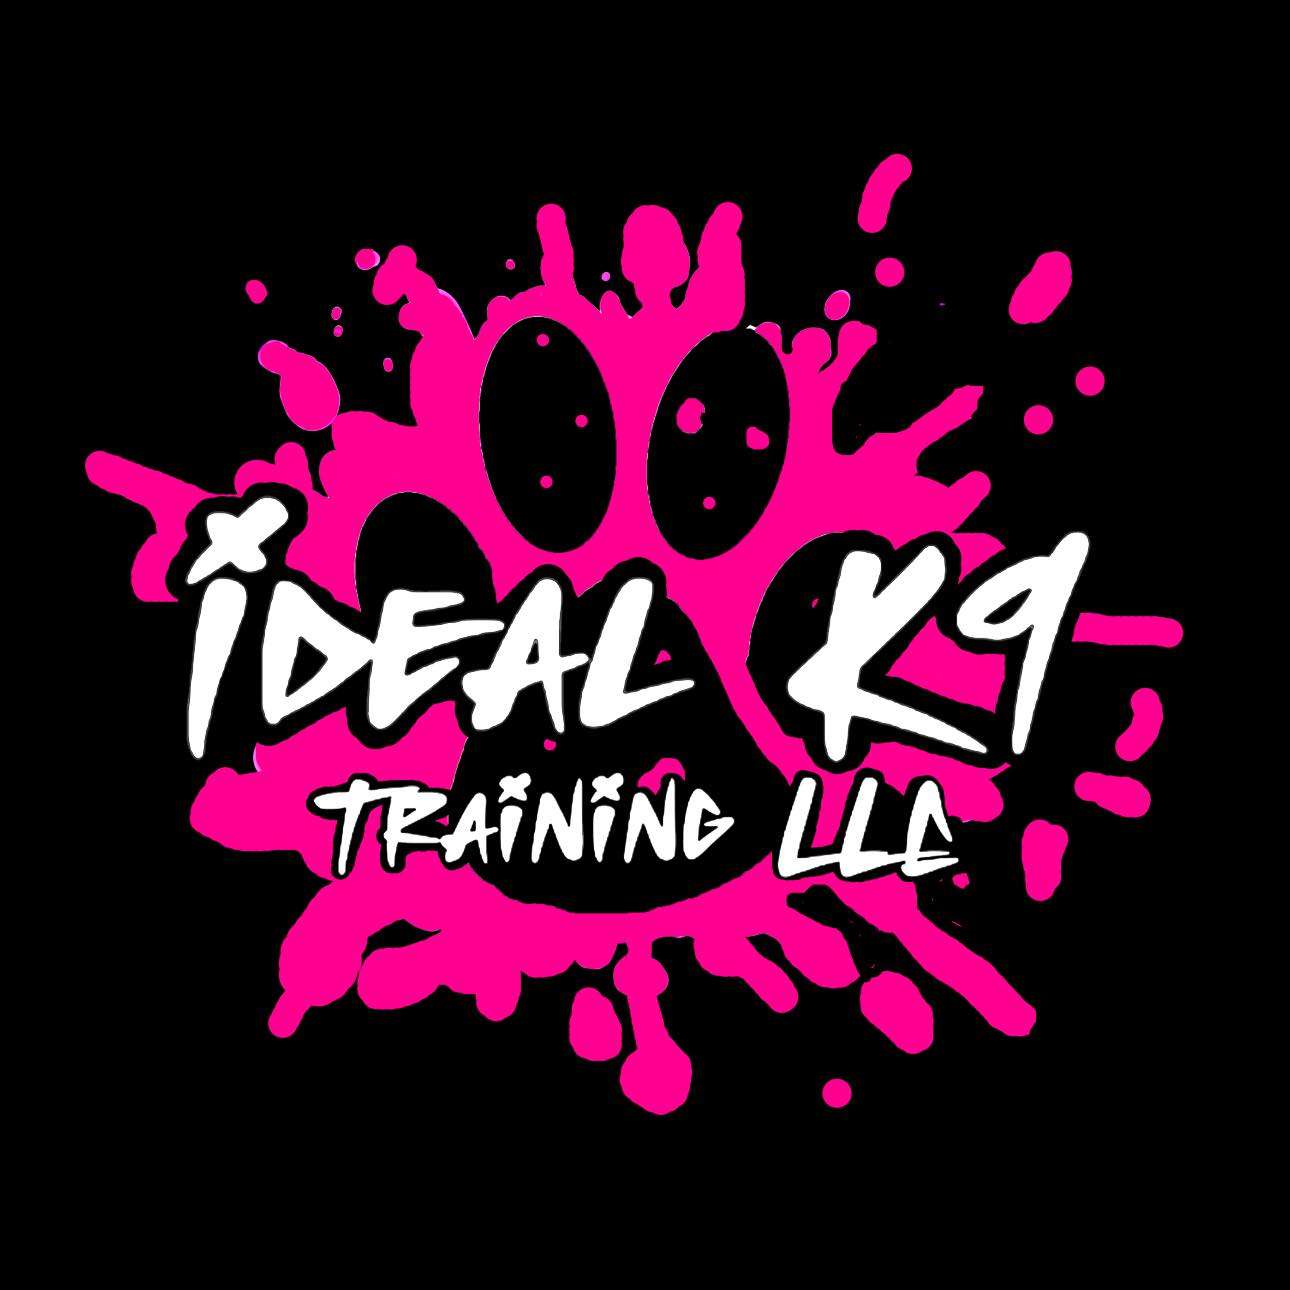 Ideal K9 Training LLC Logo